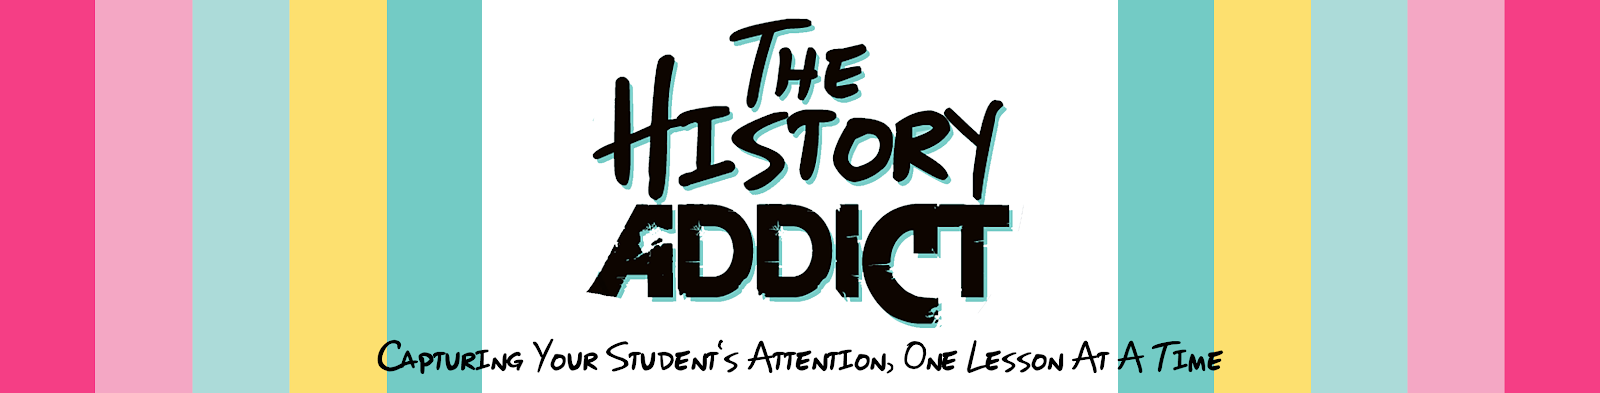 The History Addict